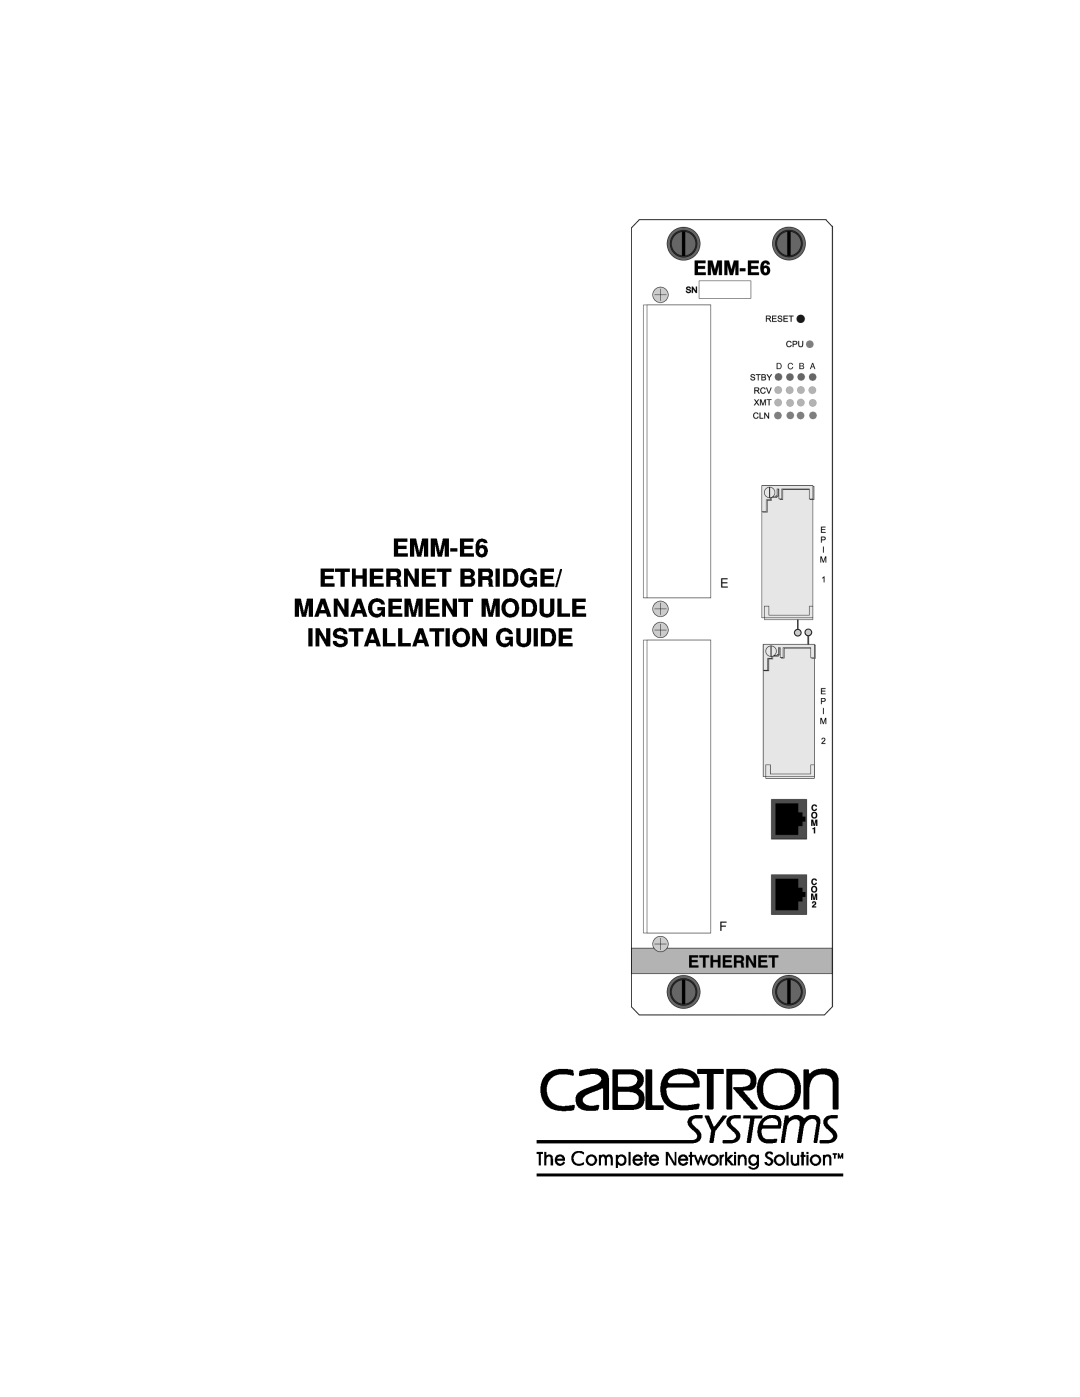 Cabletron Systems manual EMM-E6 ETHERNET BRIDGE, Management Module Installation Guide, D C B A 